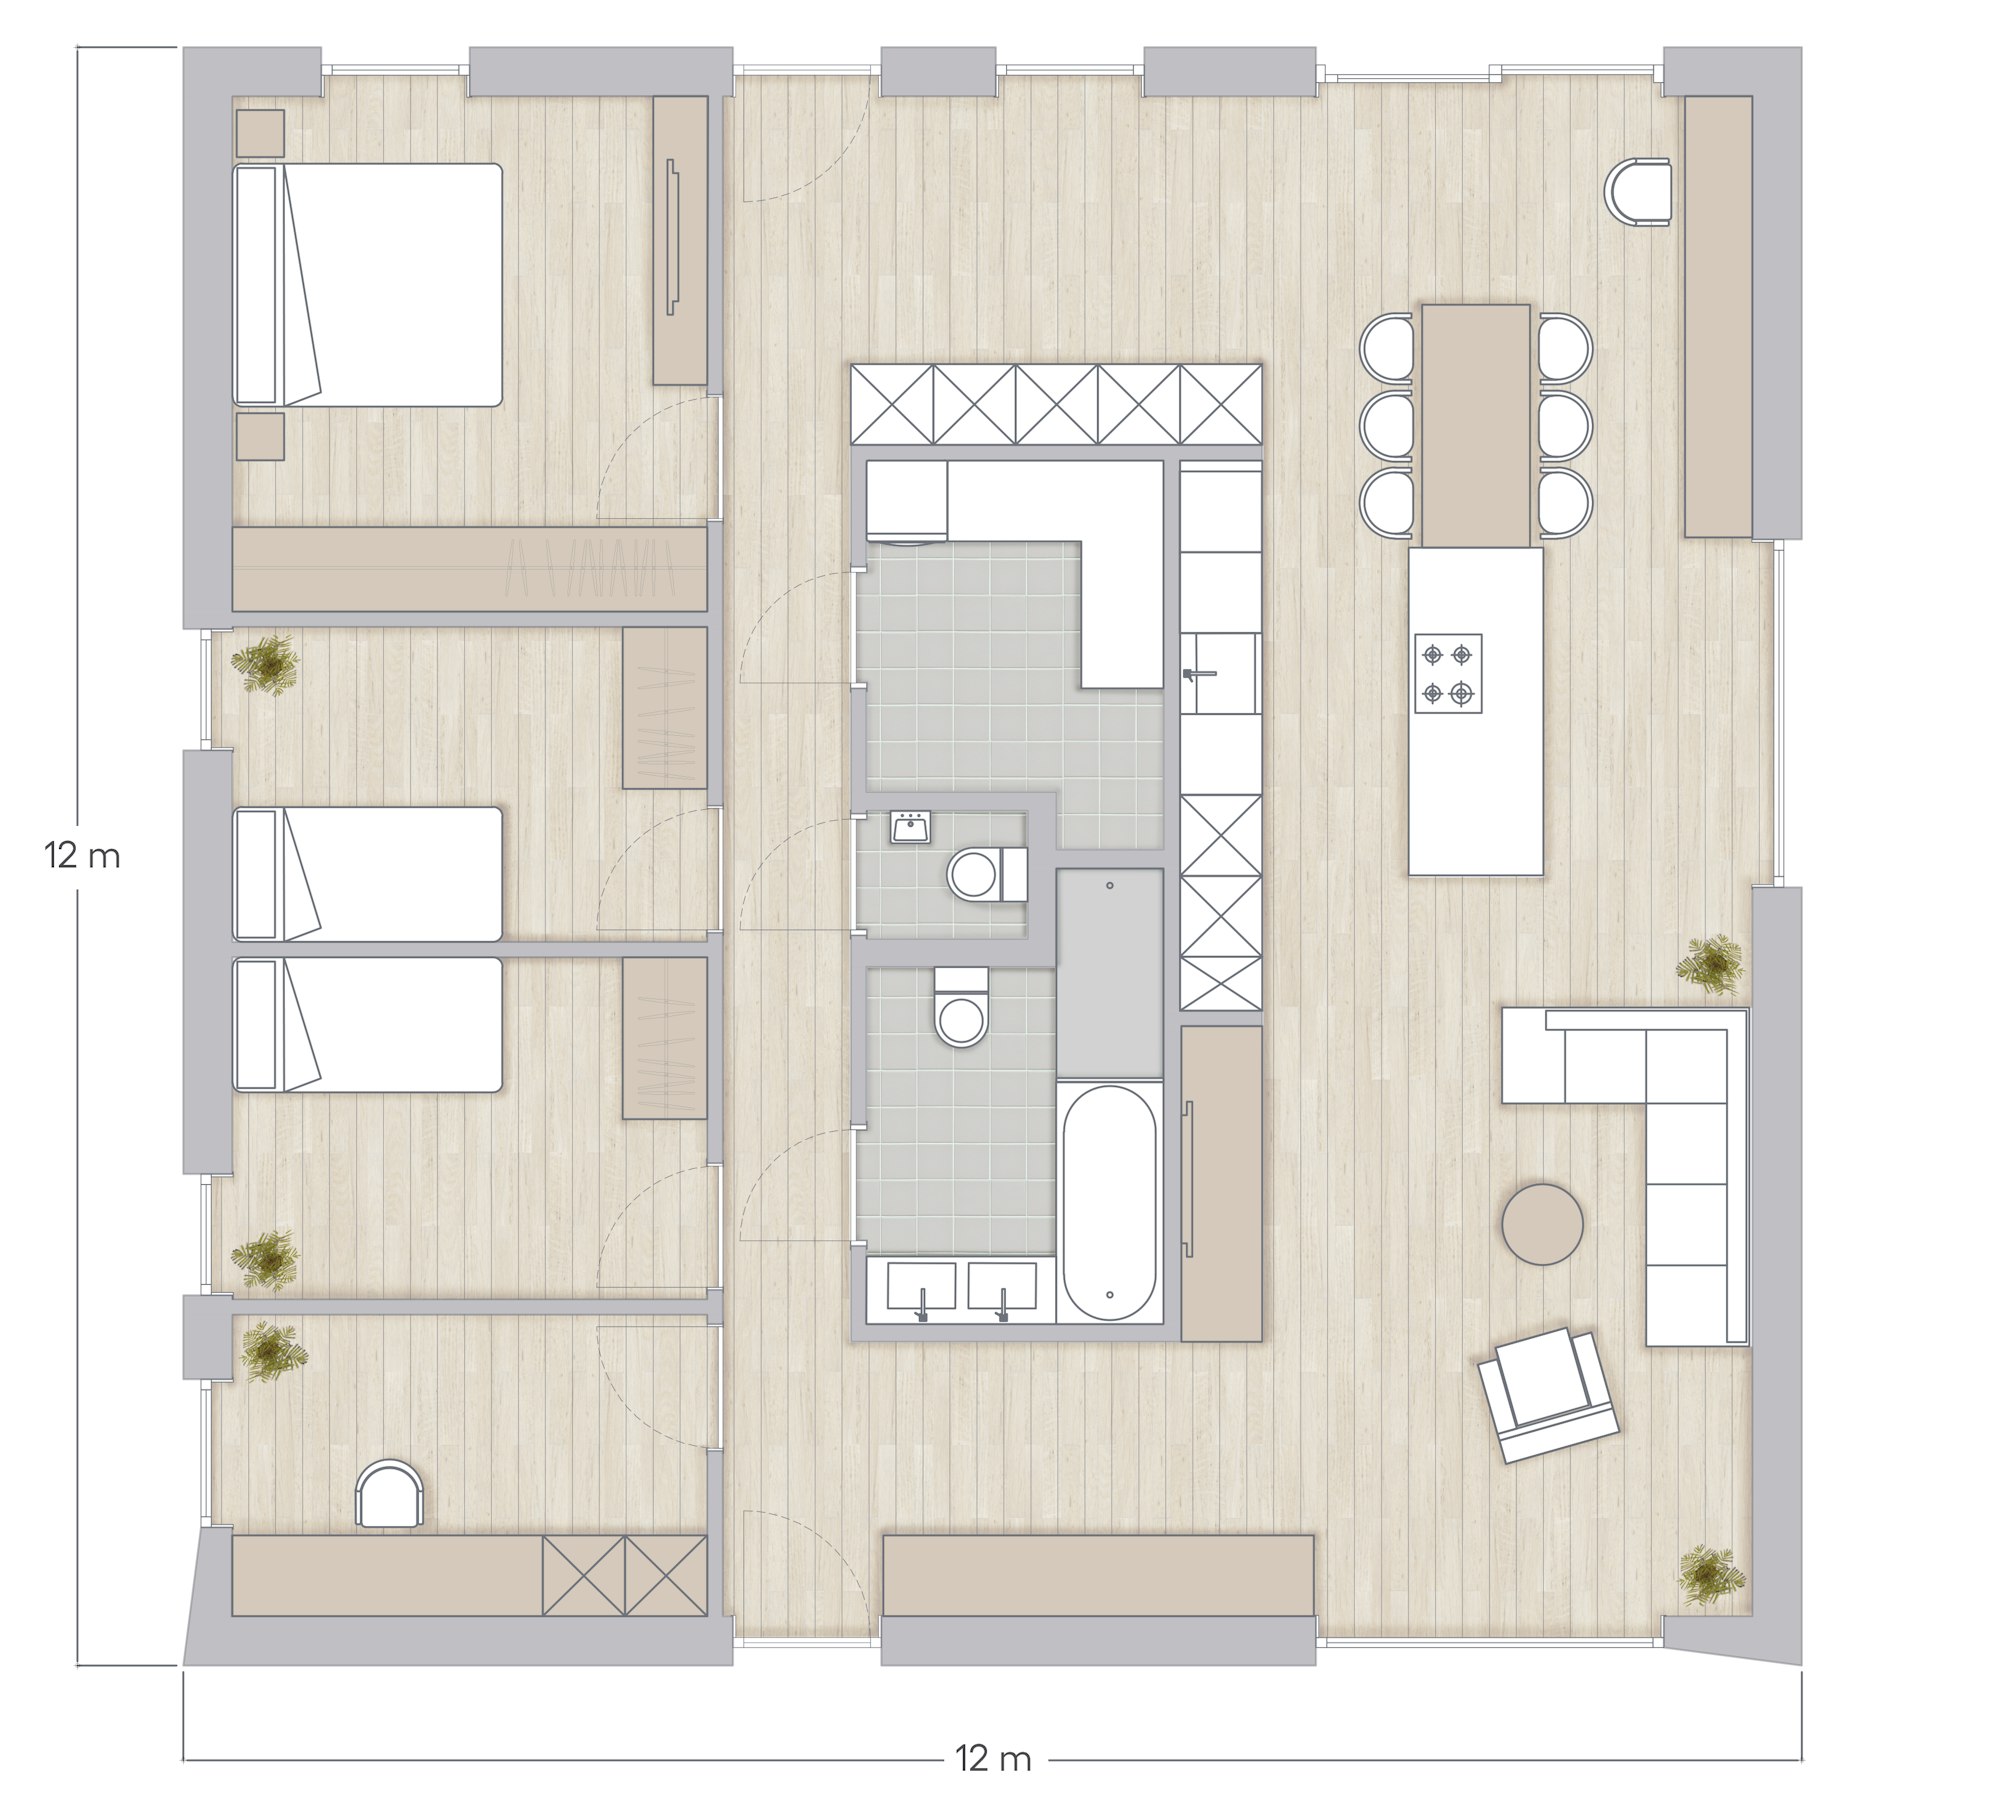 Plan Skilpod #144, 4 slaapkamers gelijkvloers bungalow woning